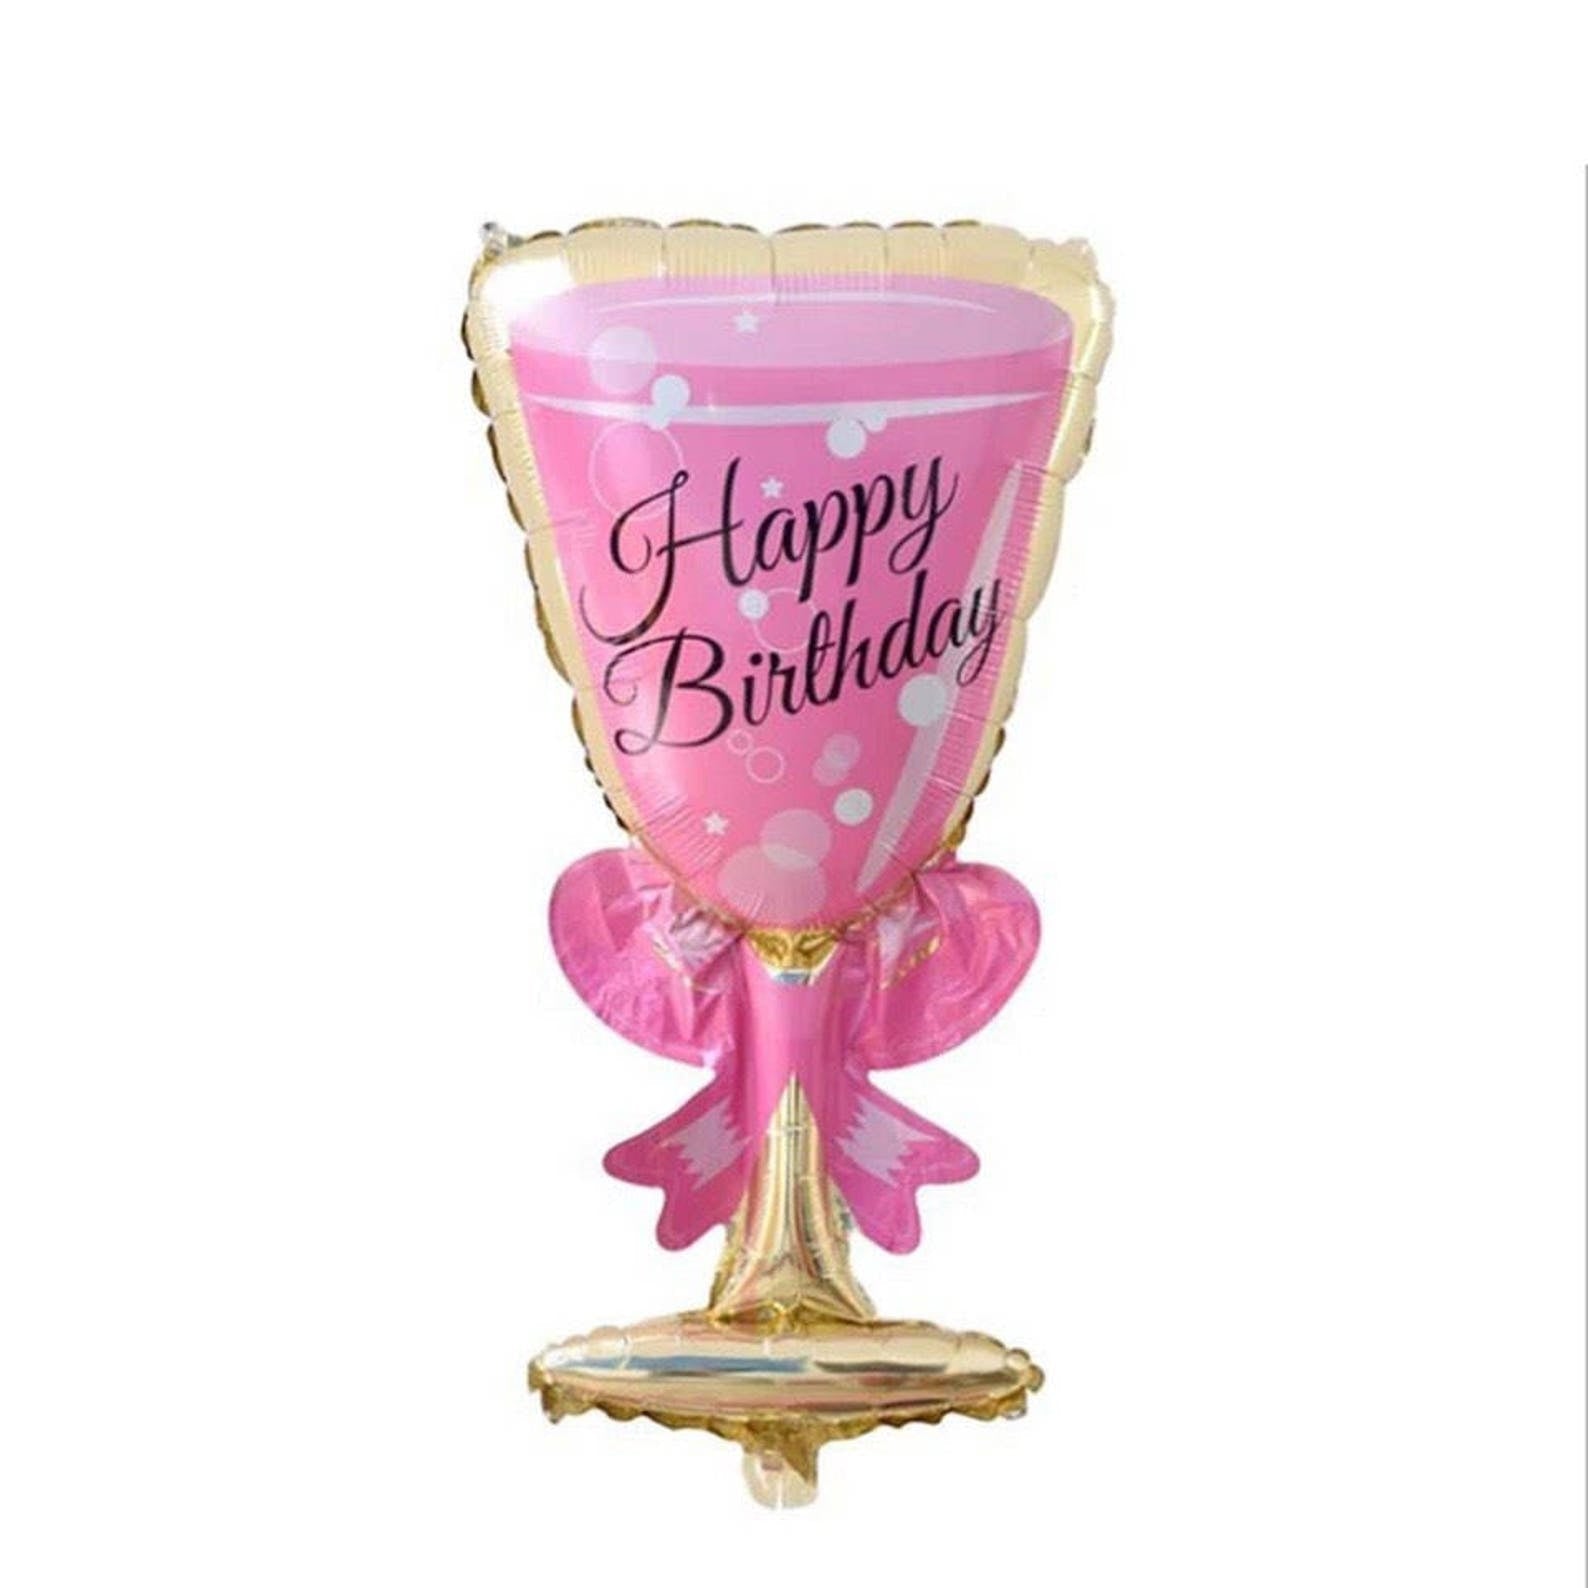 Happy birthday pink wine glass foil balloon